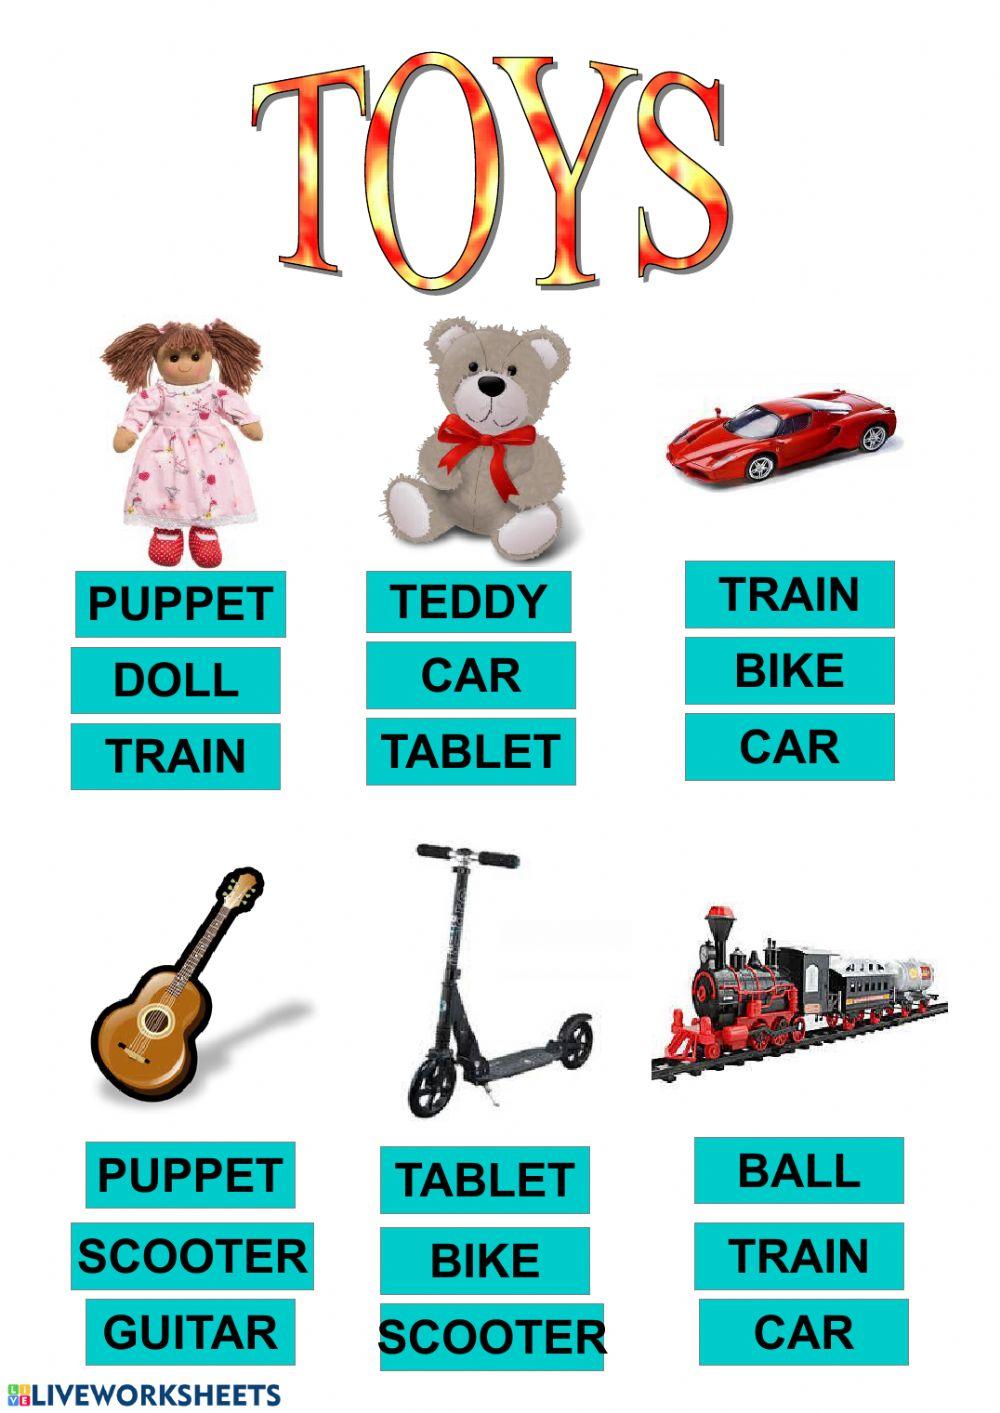 Toys vocabulary